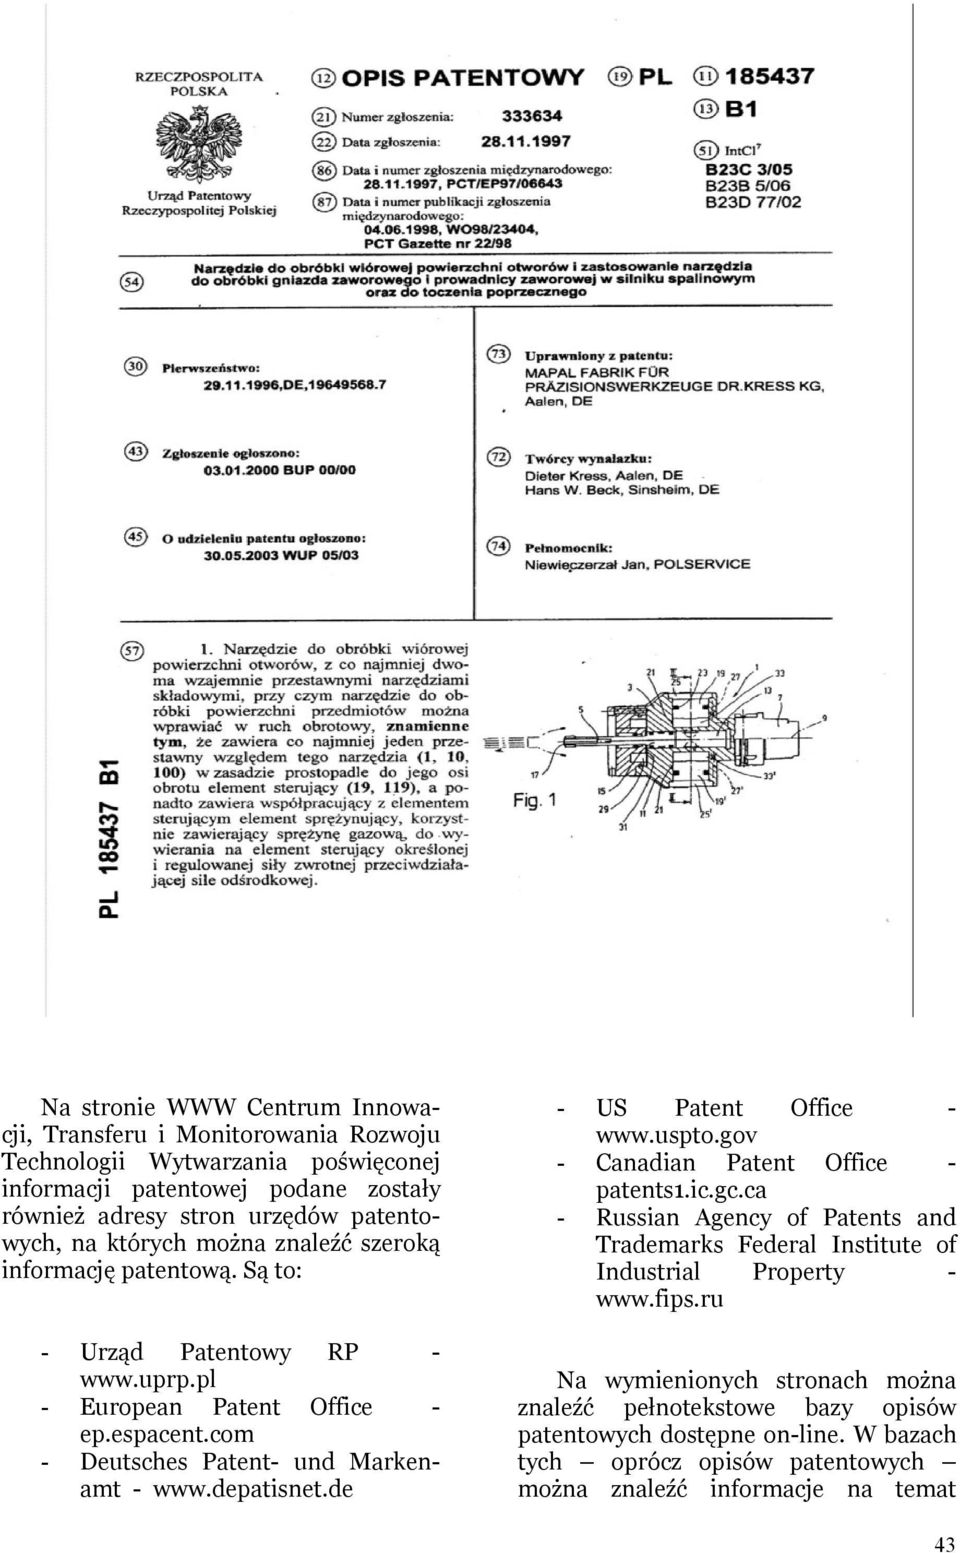 com - Deutsches Patent- und Markenamt - www.depatisnet.de - US Patent Office - www.uspto.gov - Canadian Patent Office - patents1.ic.gc.